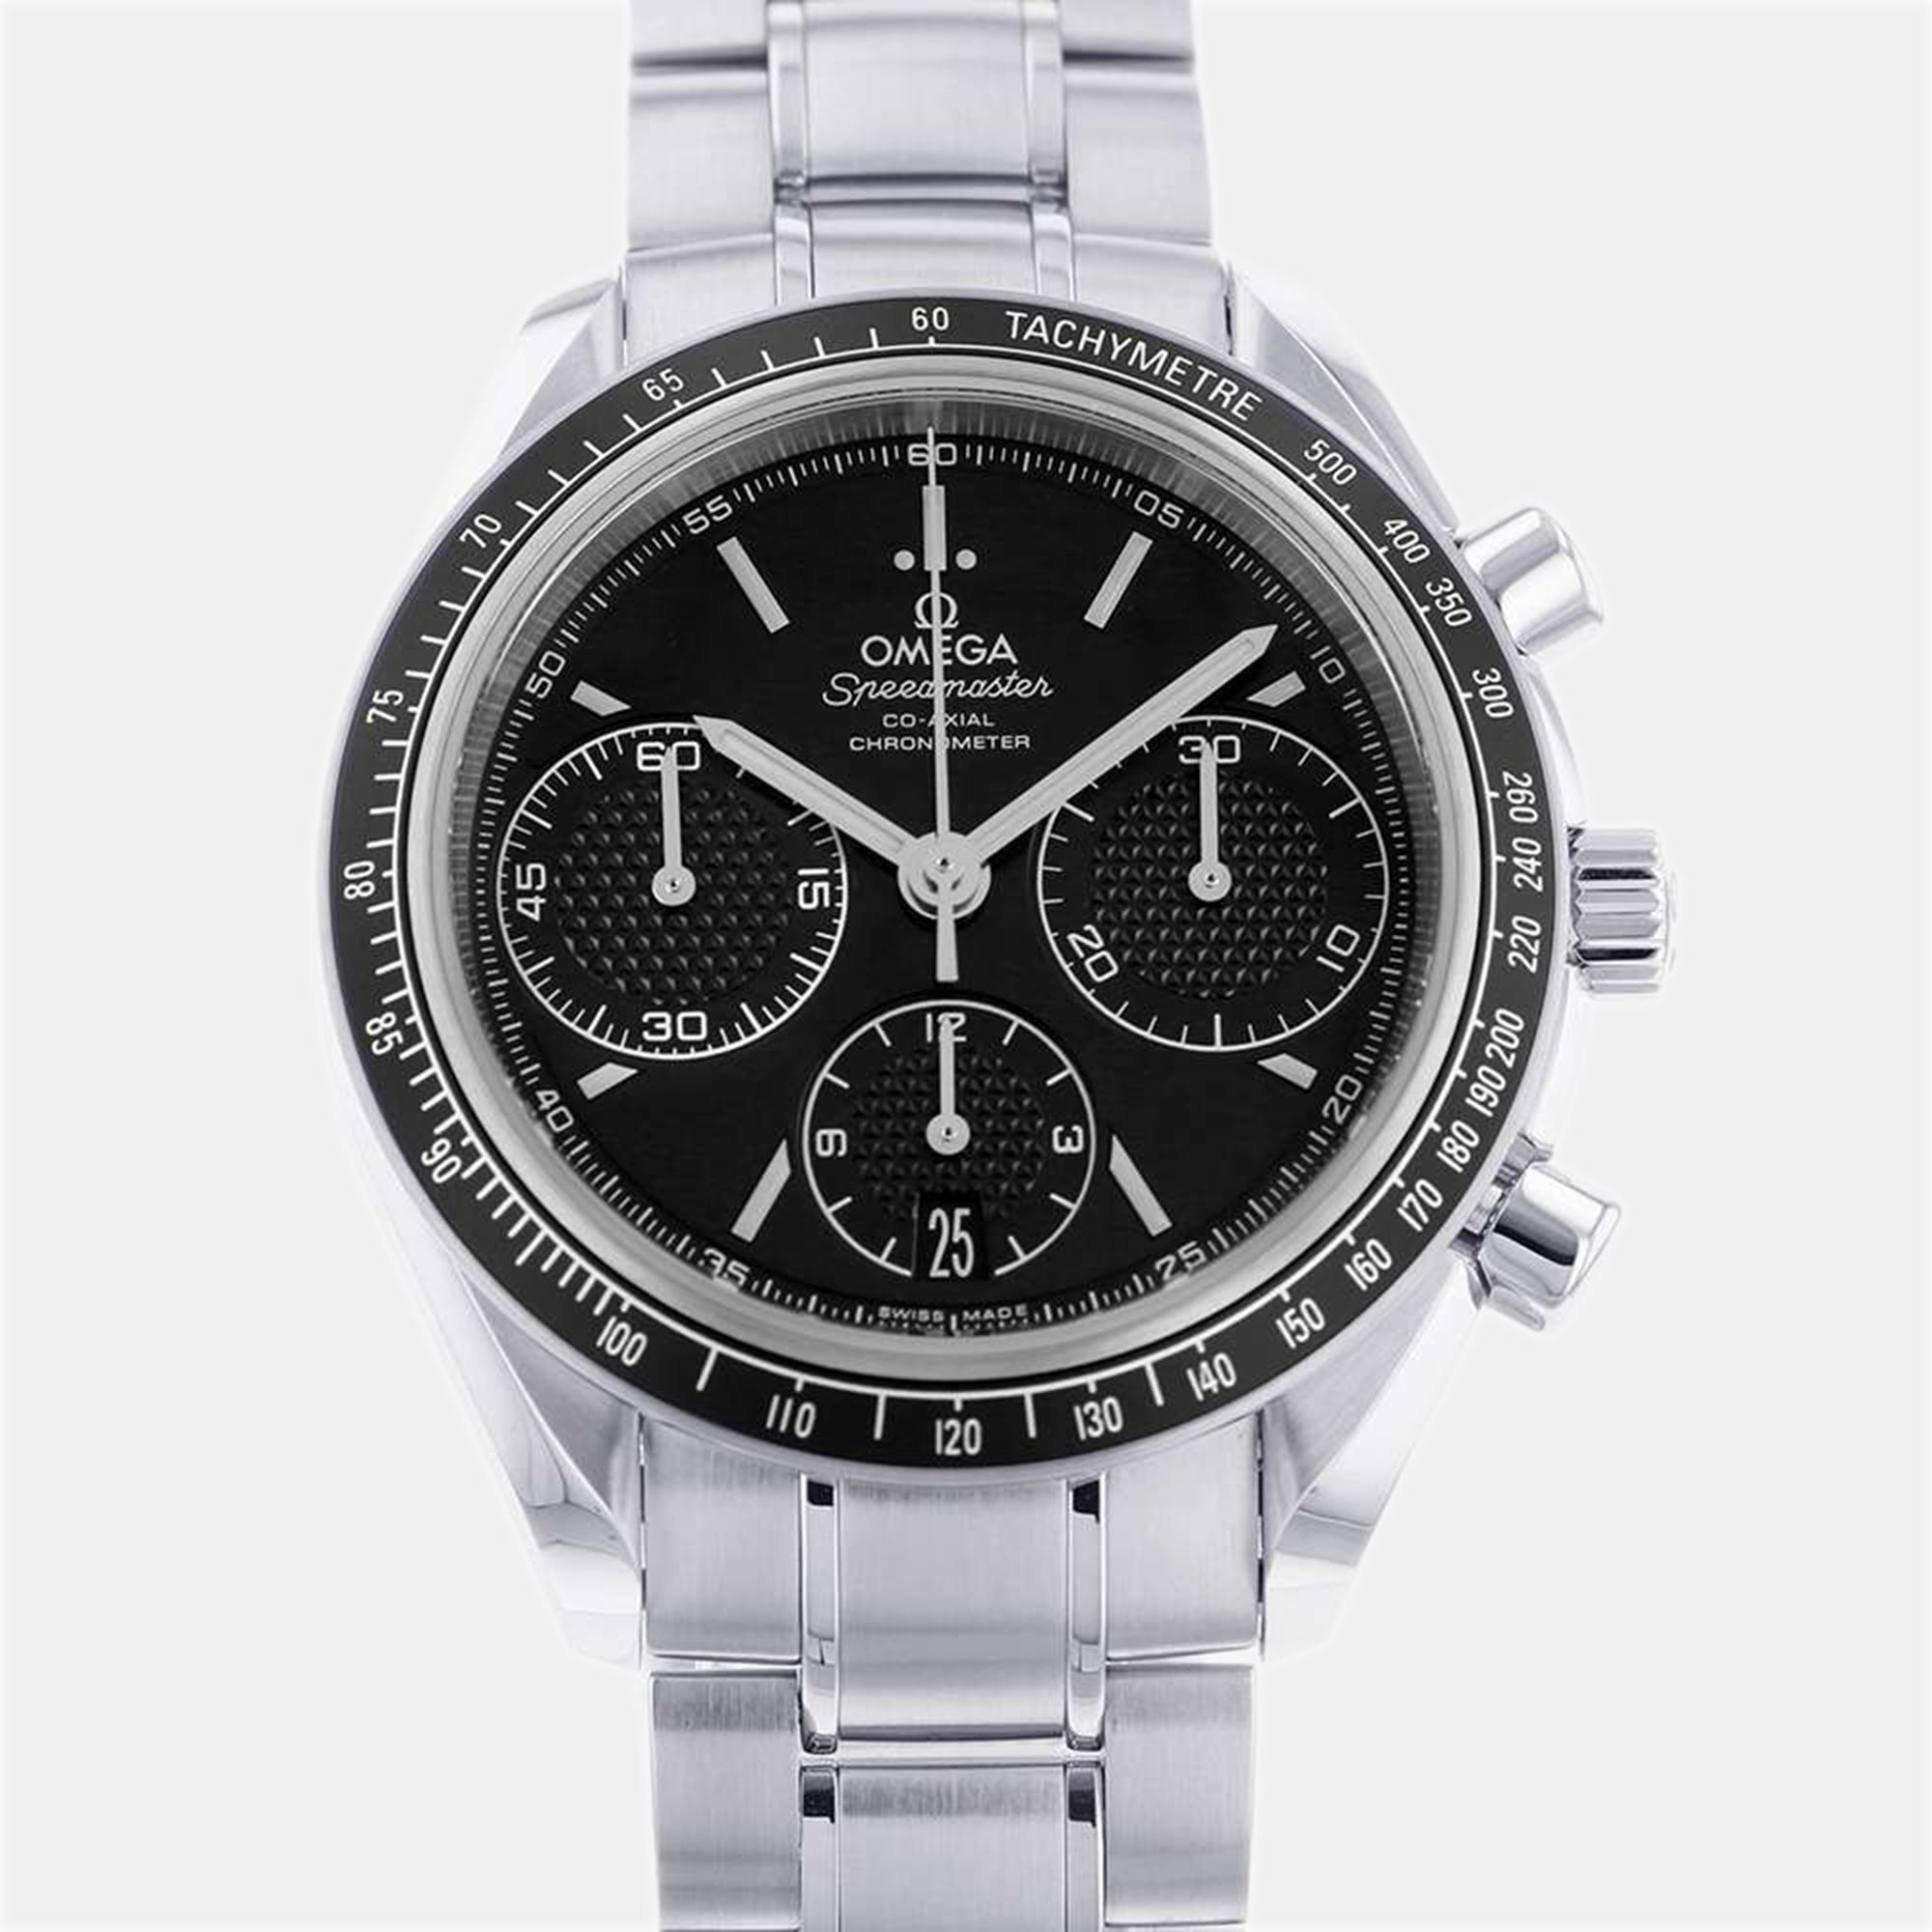 Omega black stainless steel speedmaster 326.30.40.50.01.001 automatic men's wristwatch 40 mm